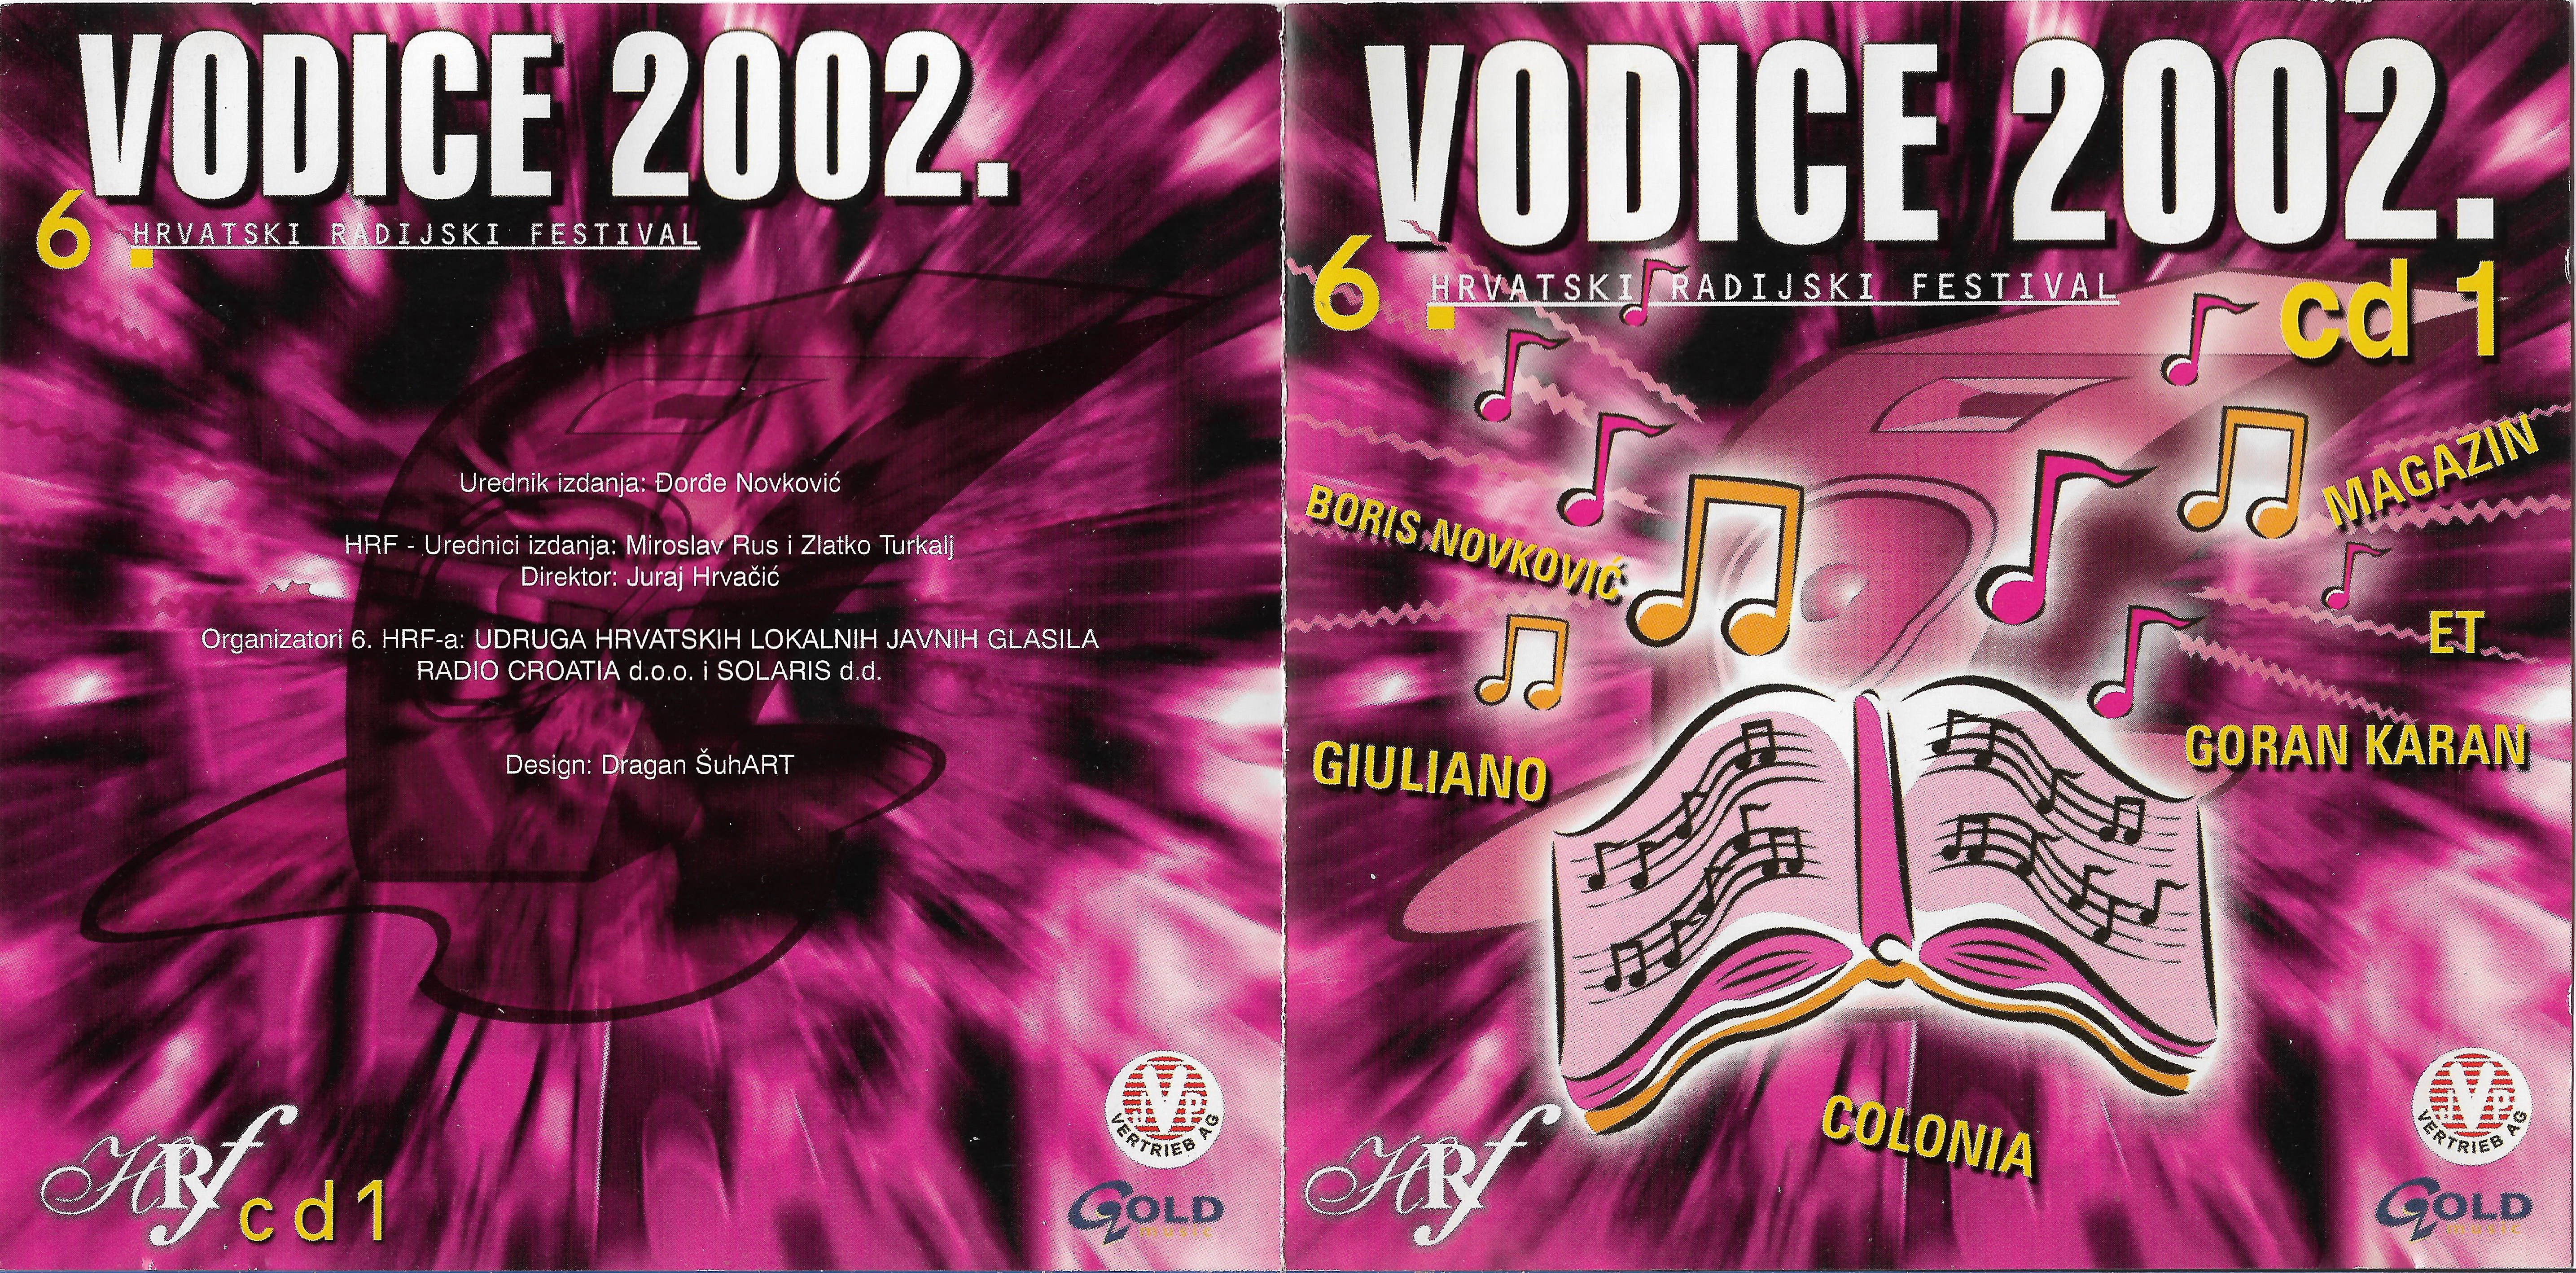 Vodice 2002 CD 1 1